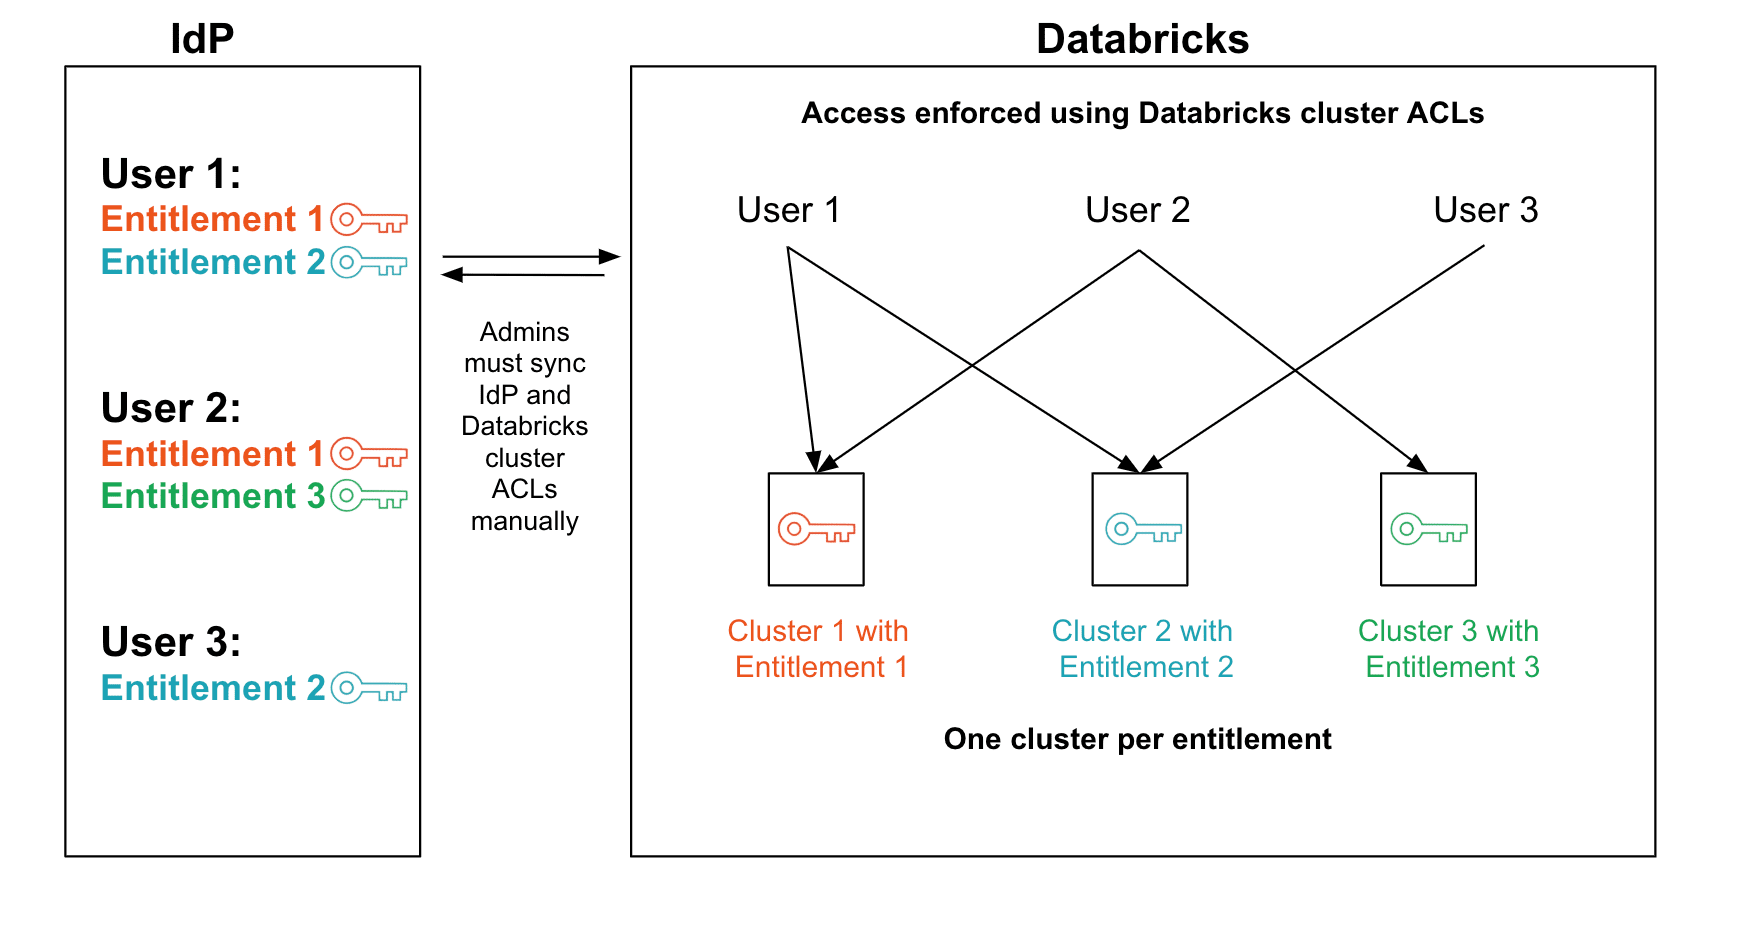 Sub-Optimal System 1: One EC2 instance per entitlement